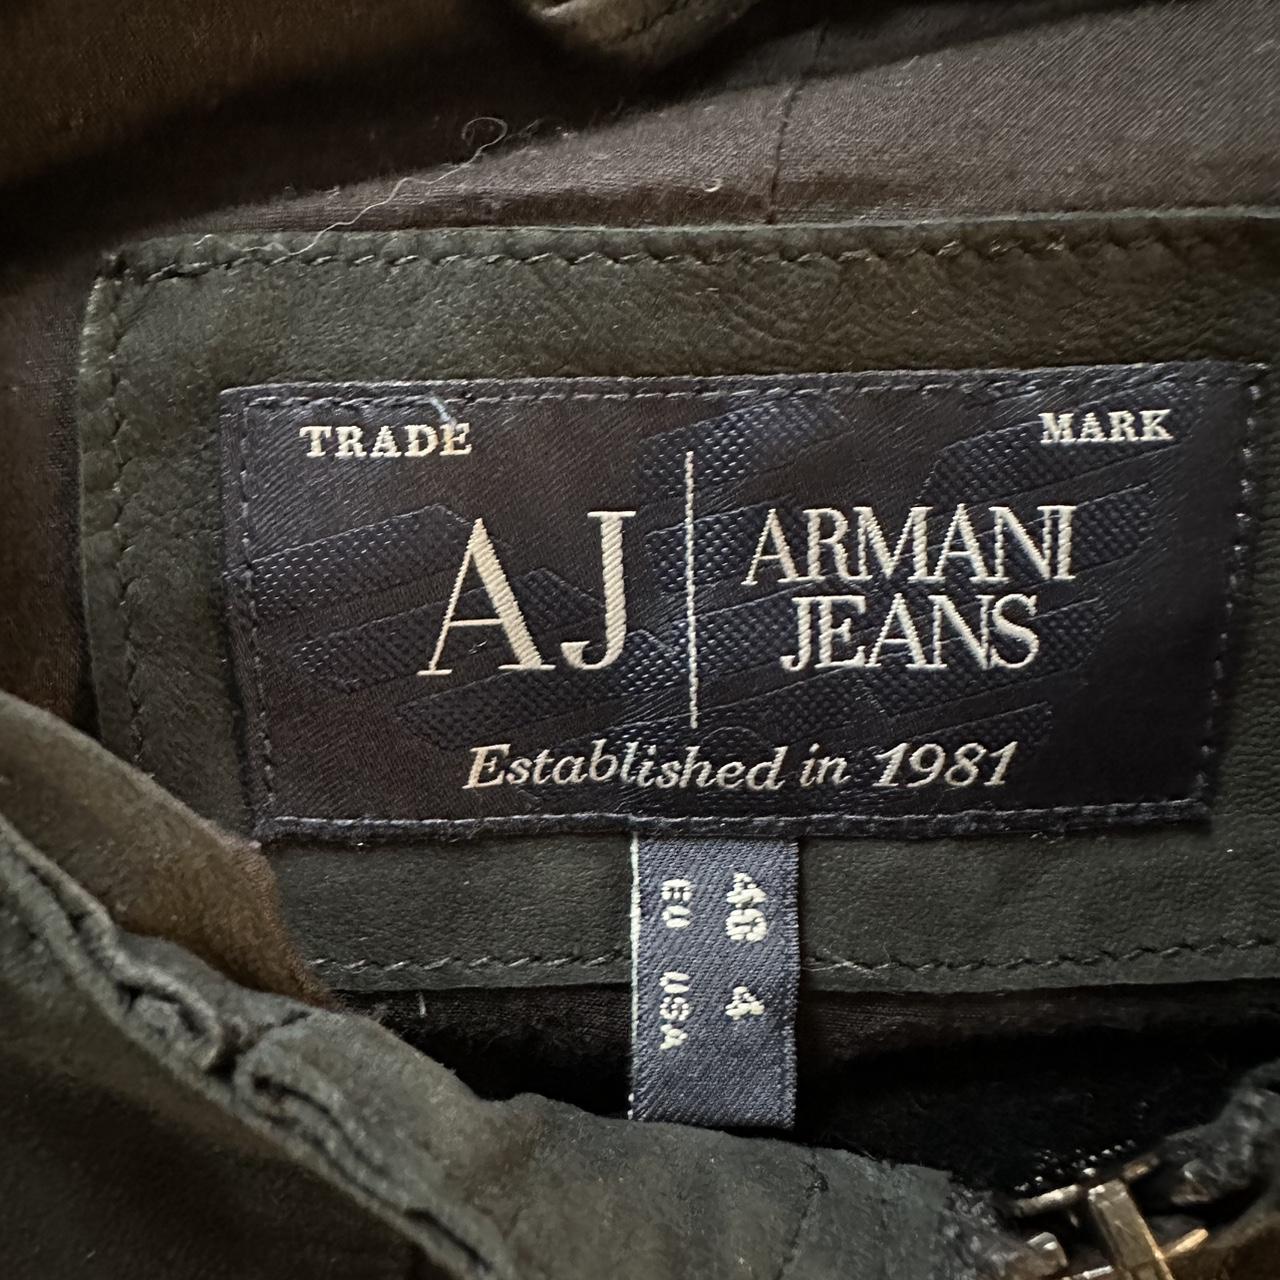 Armani Jeans Suede Bomber Jacket Haven’t really... - Depop